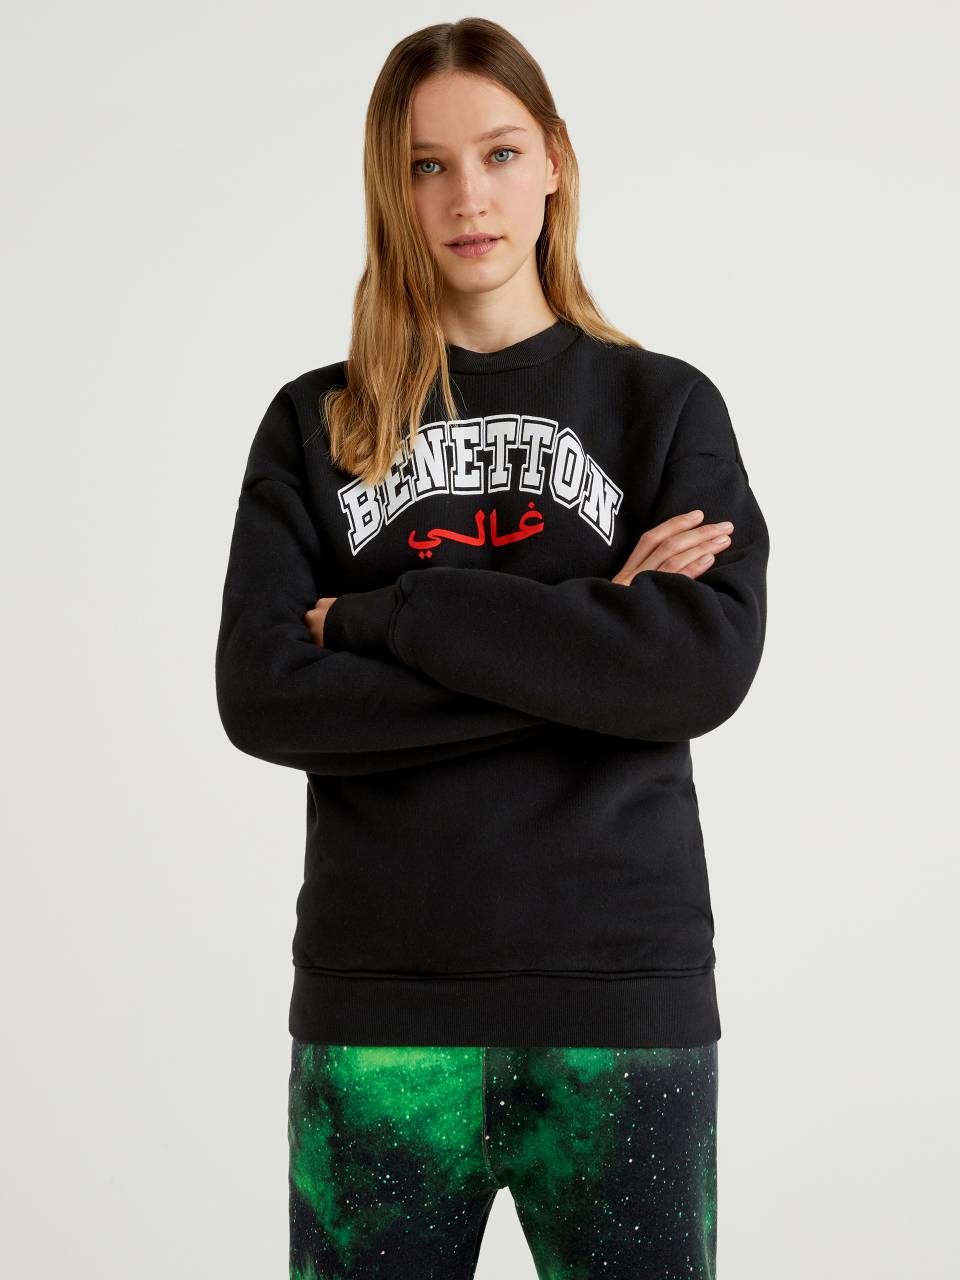 Benetton Black crew neck sweatshirt with print by Ghali. 1